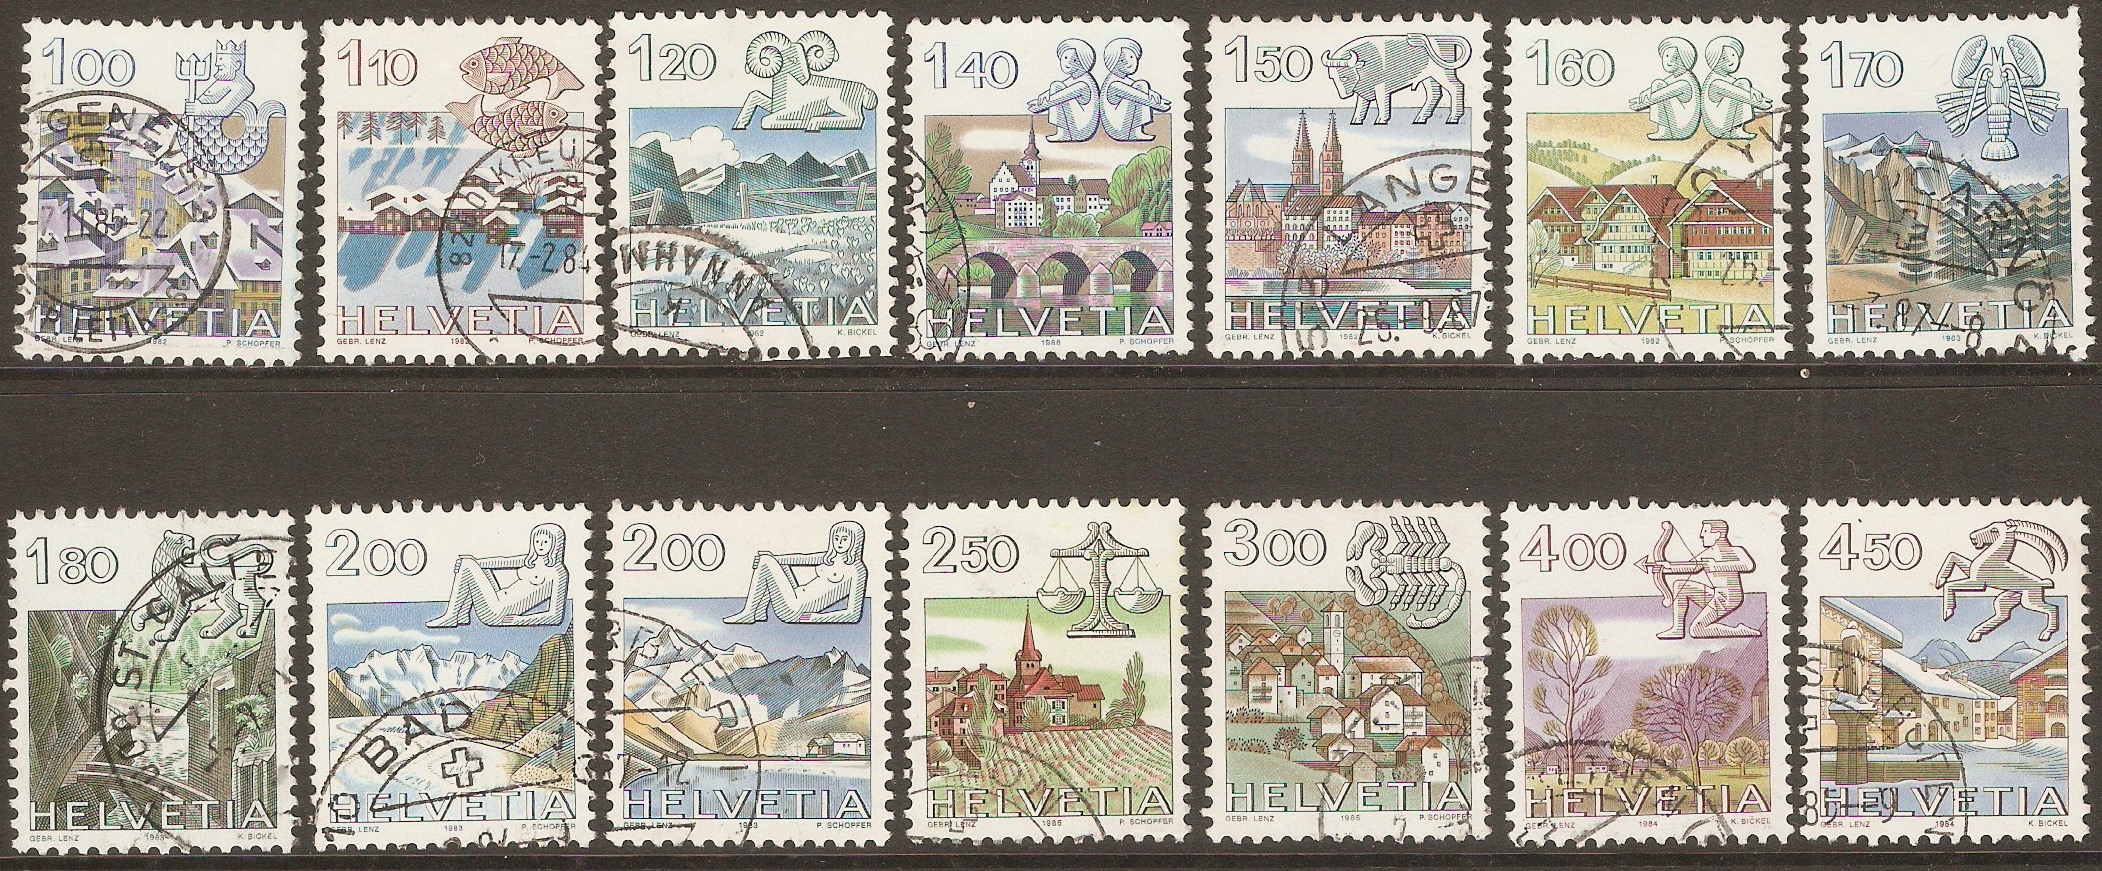 Switzerland 1982 Zodiac Signs set. SG1034-SG1045.